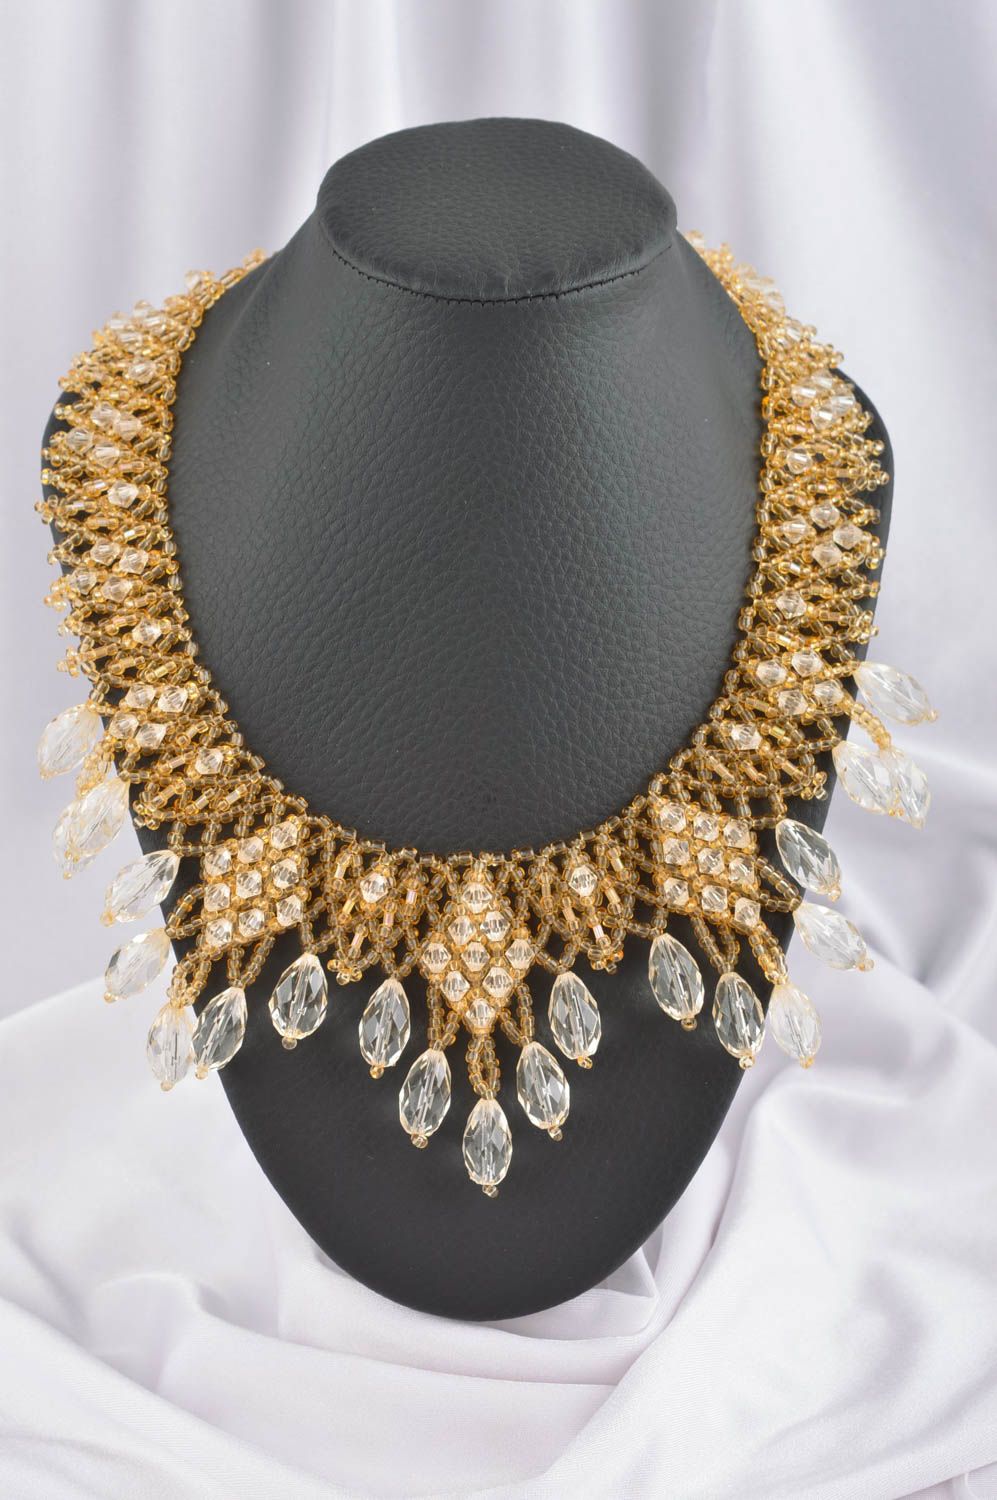 Handmade jewelry unusual necklace designer accessory unusual gift ideas photo 1